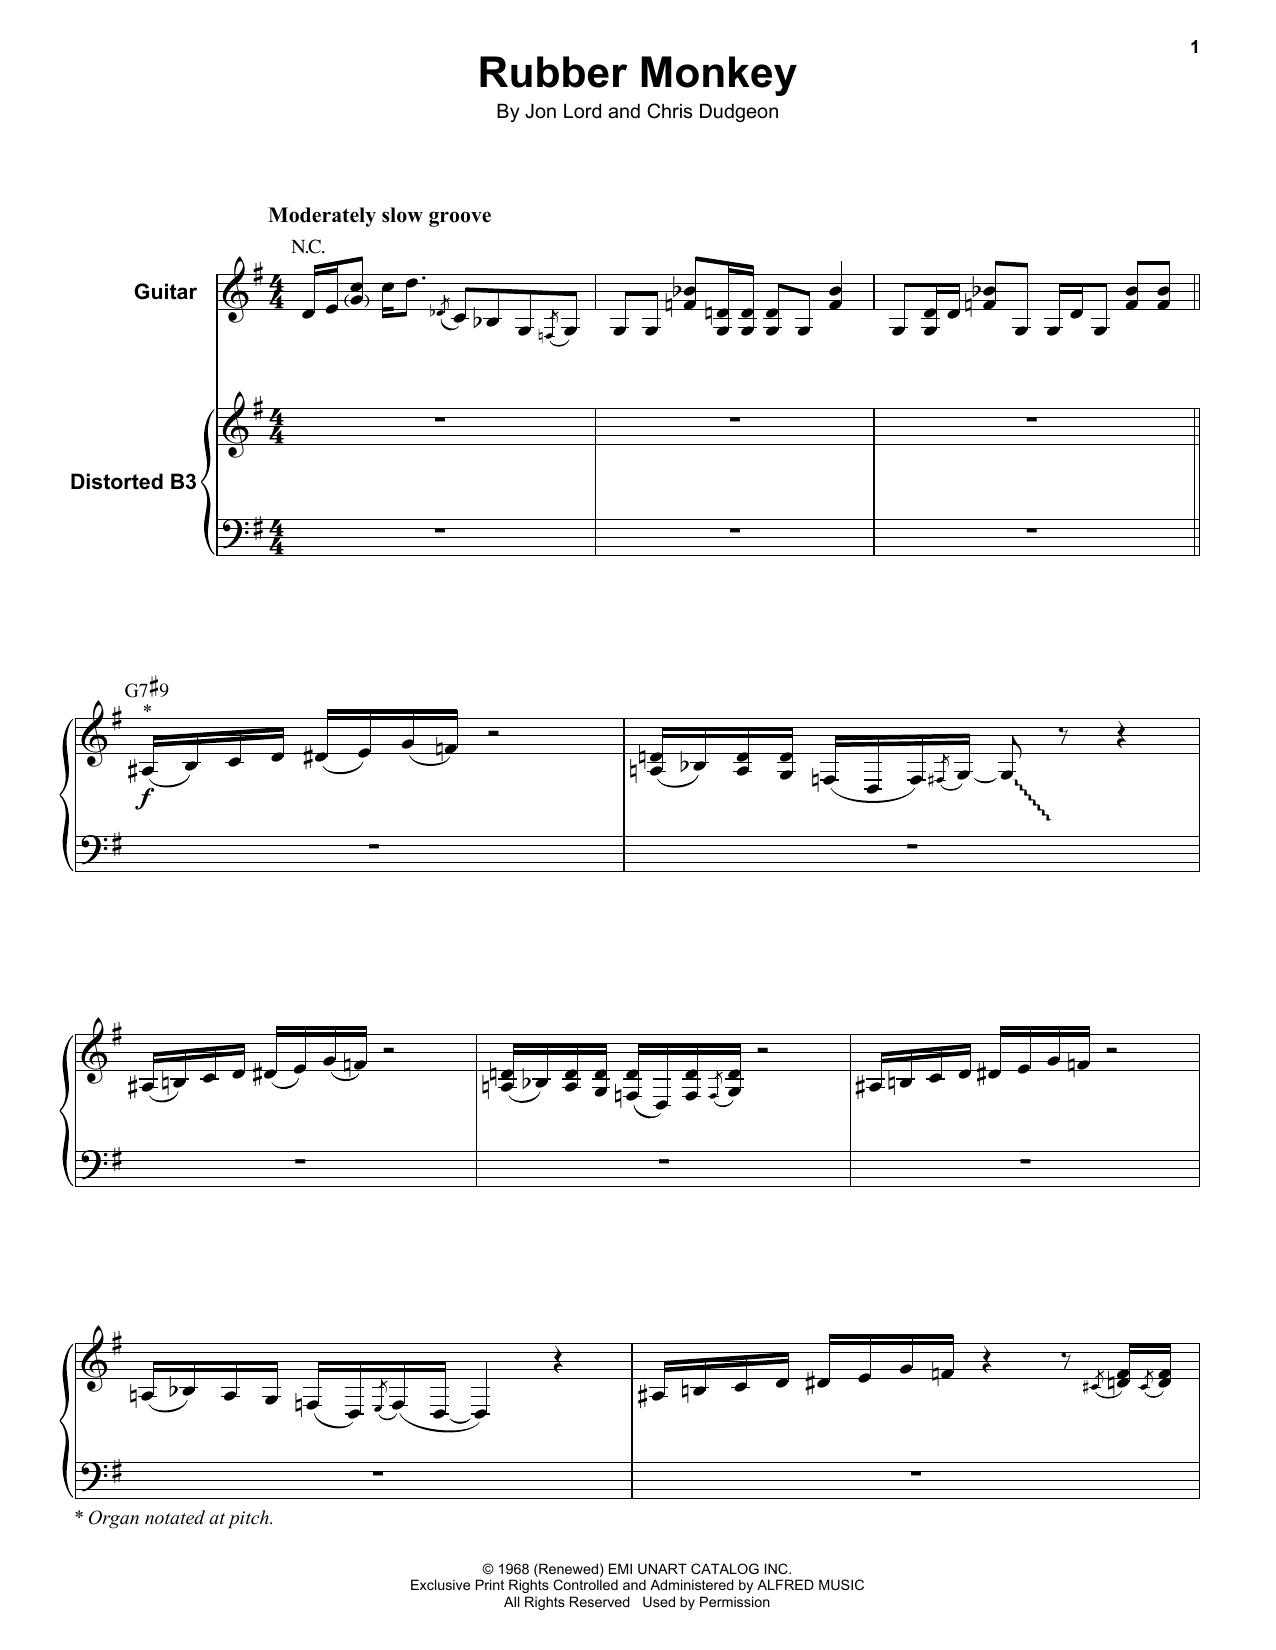 Santa Barbara Machine Head Rubber Monkey sheet music notes and chords arranged for Keyboard Transcription